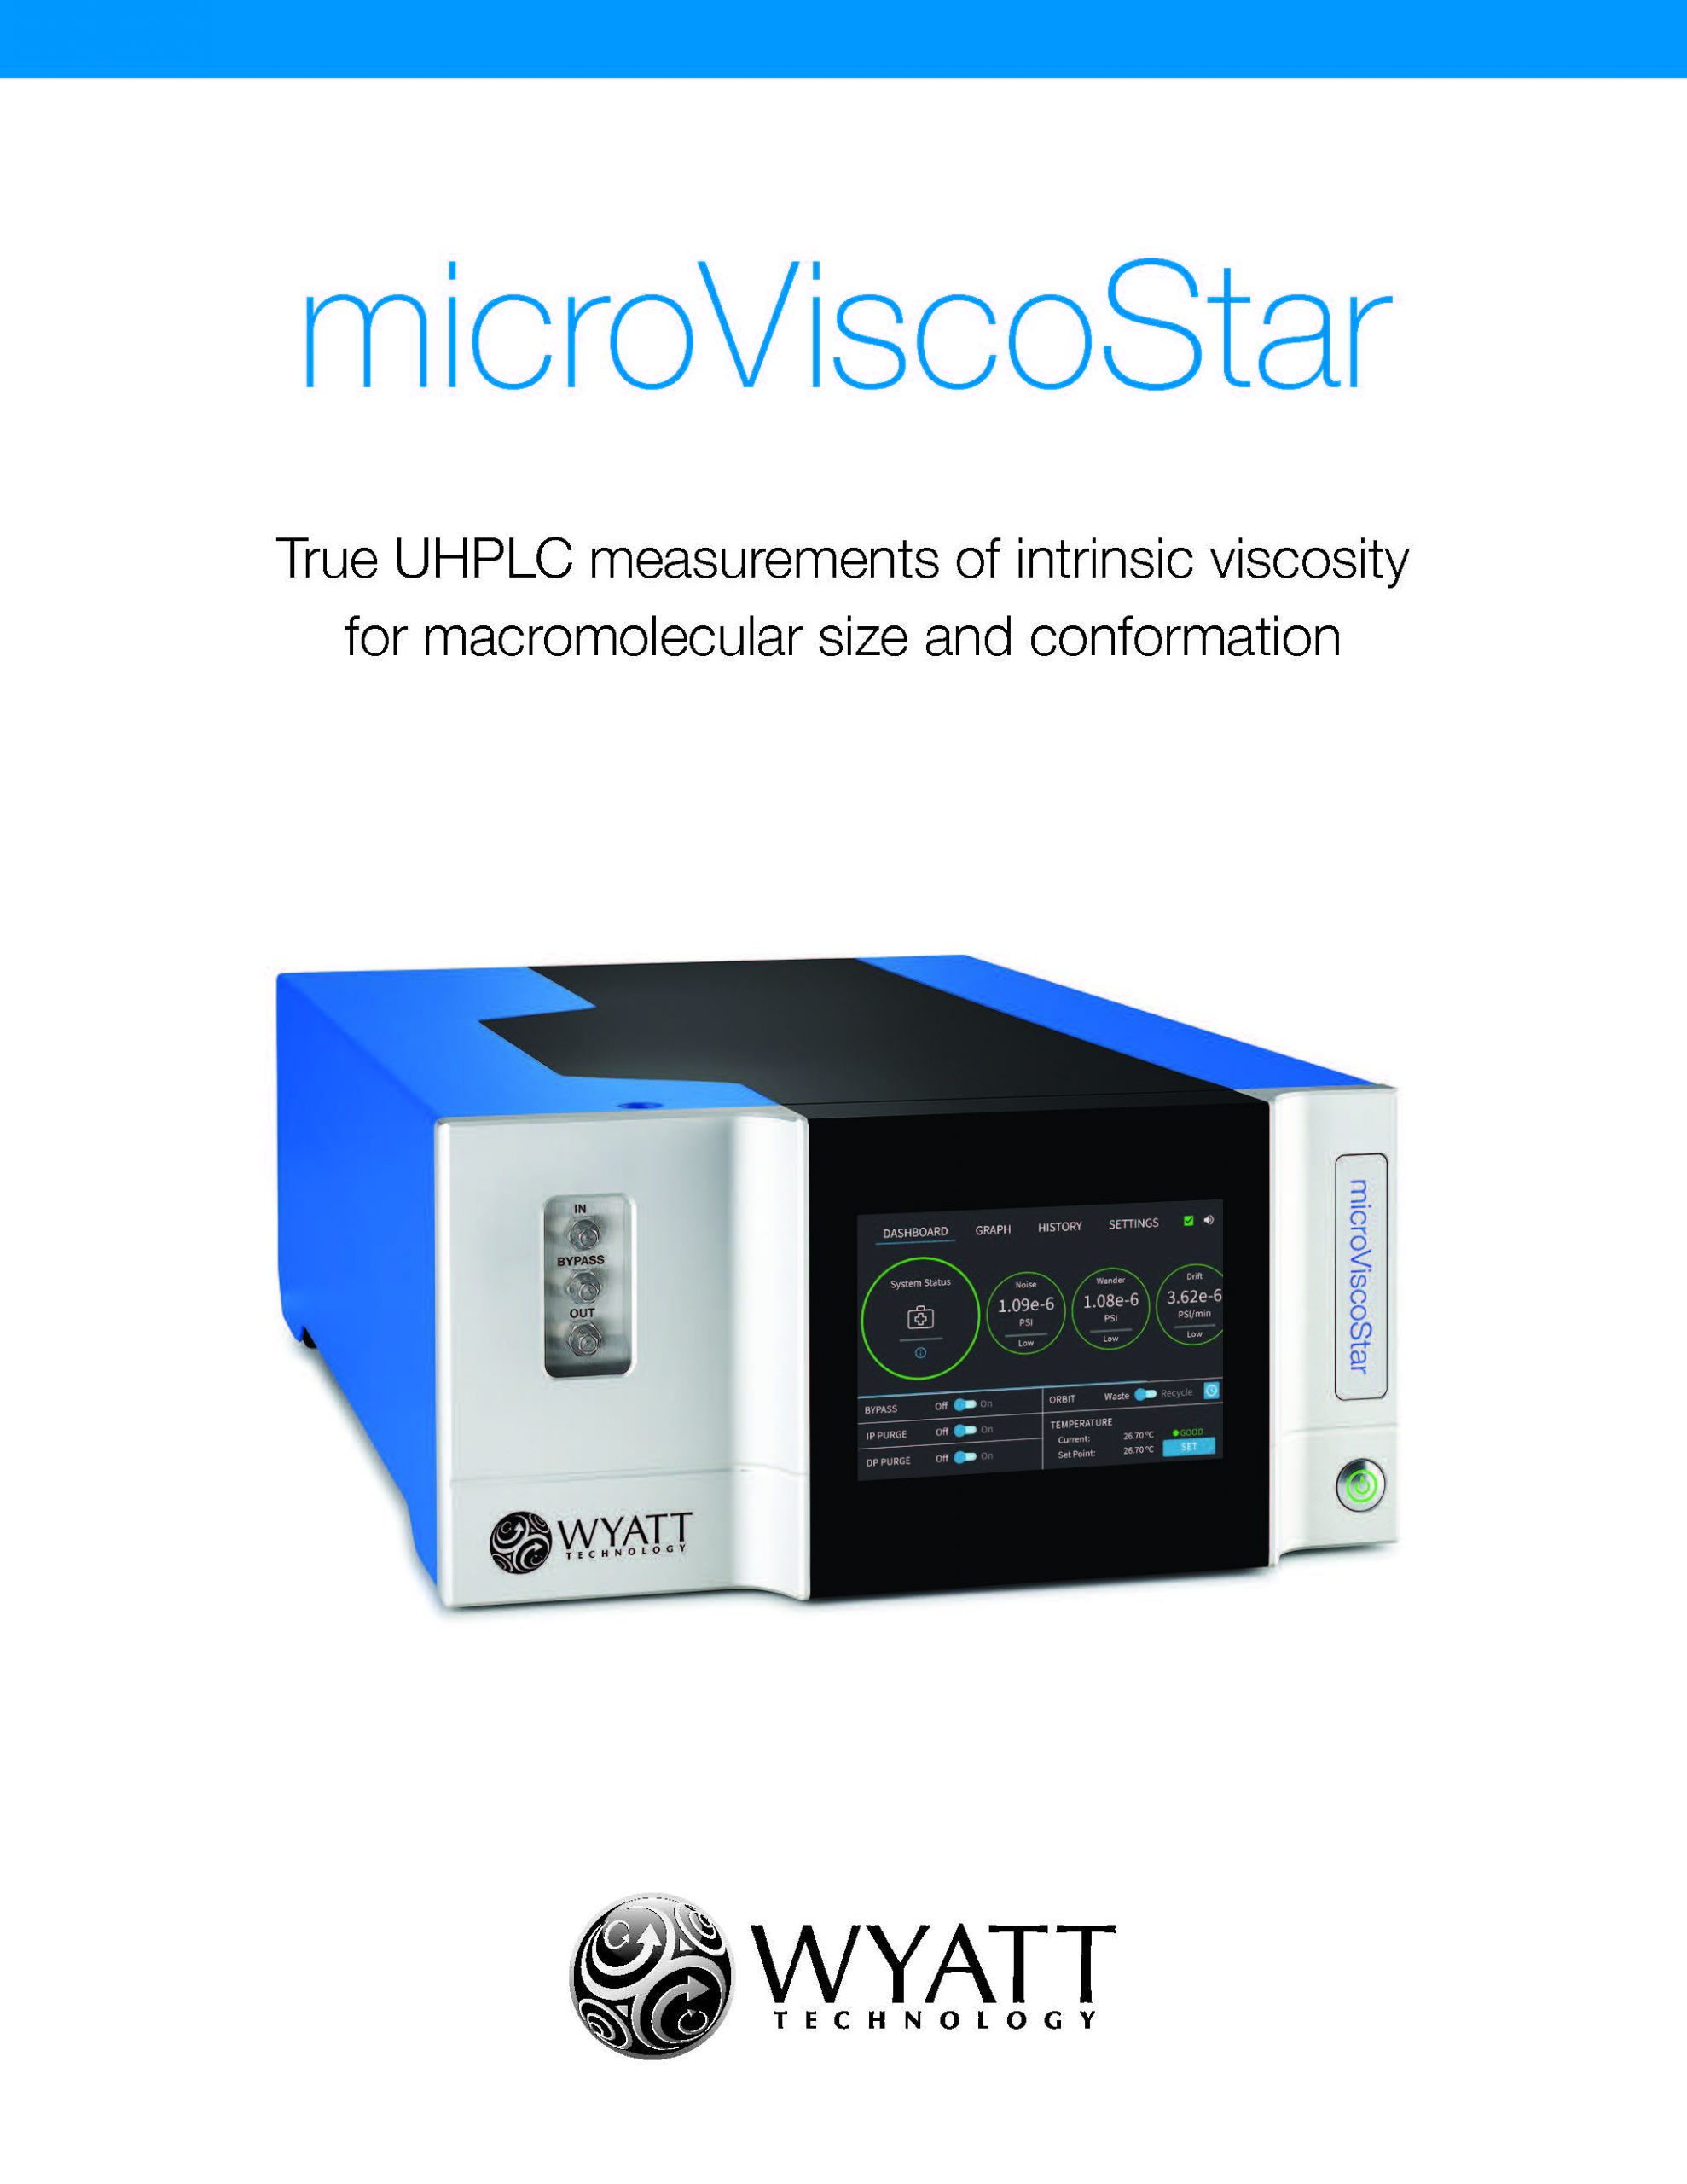 microViscoStar Brochure Request